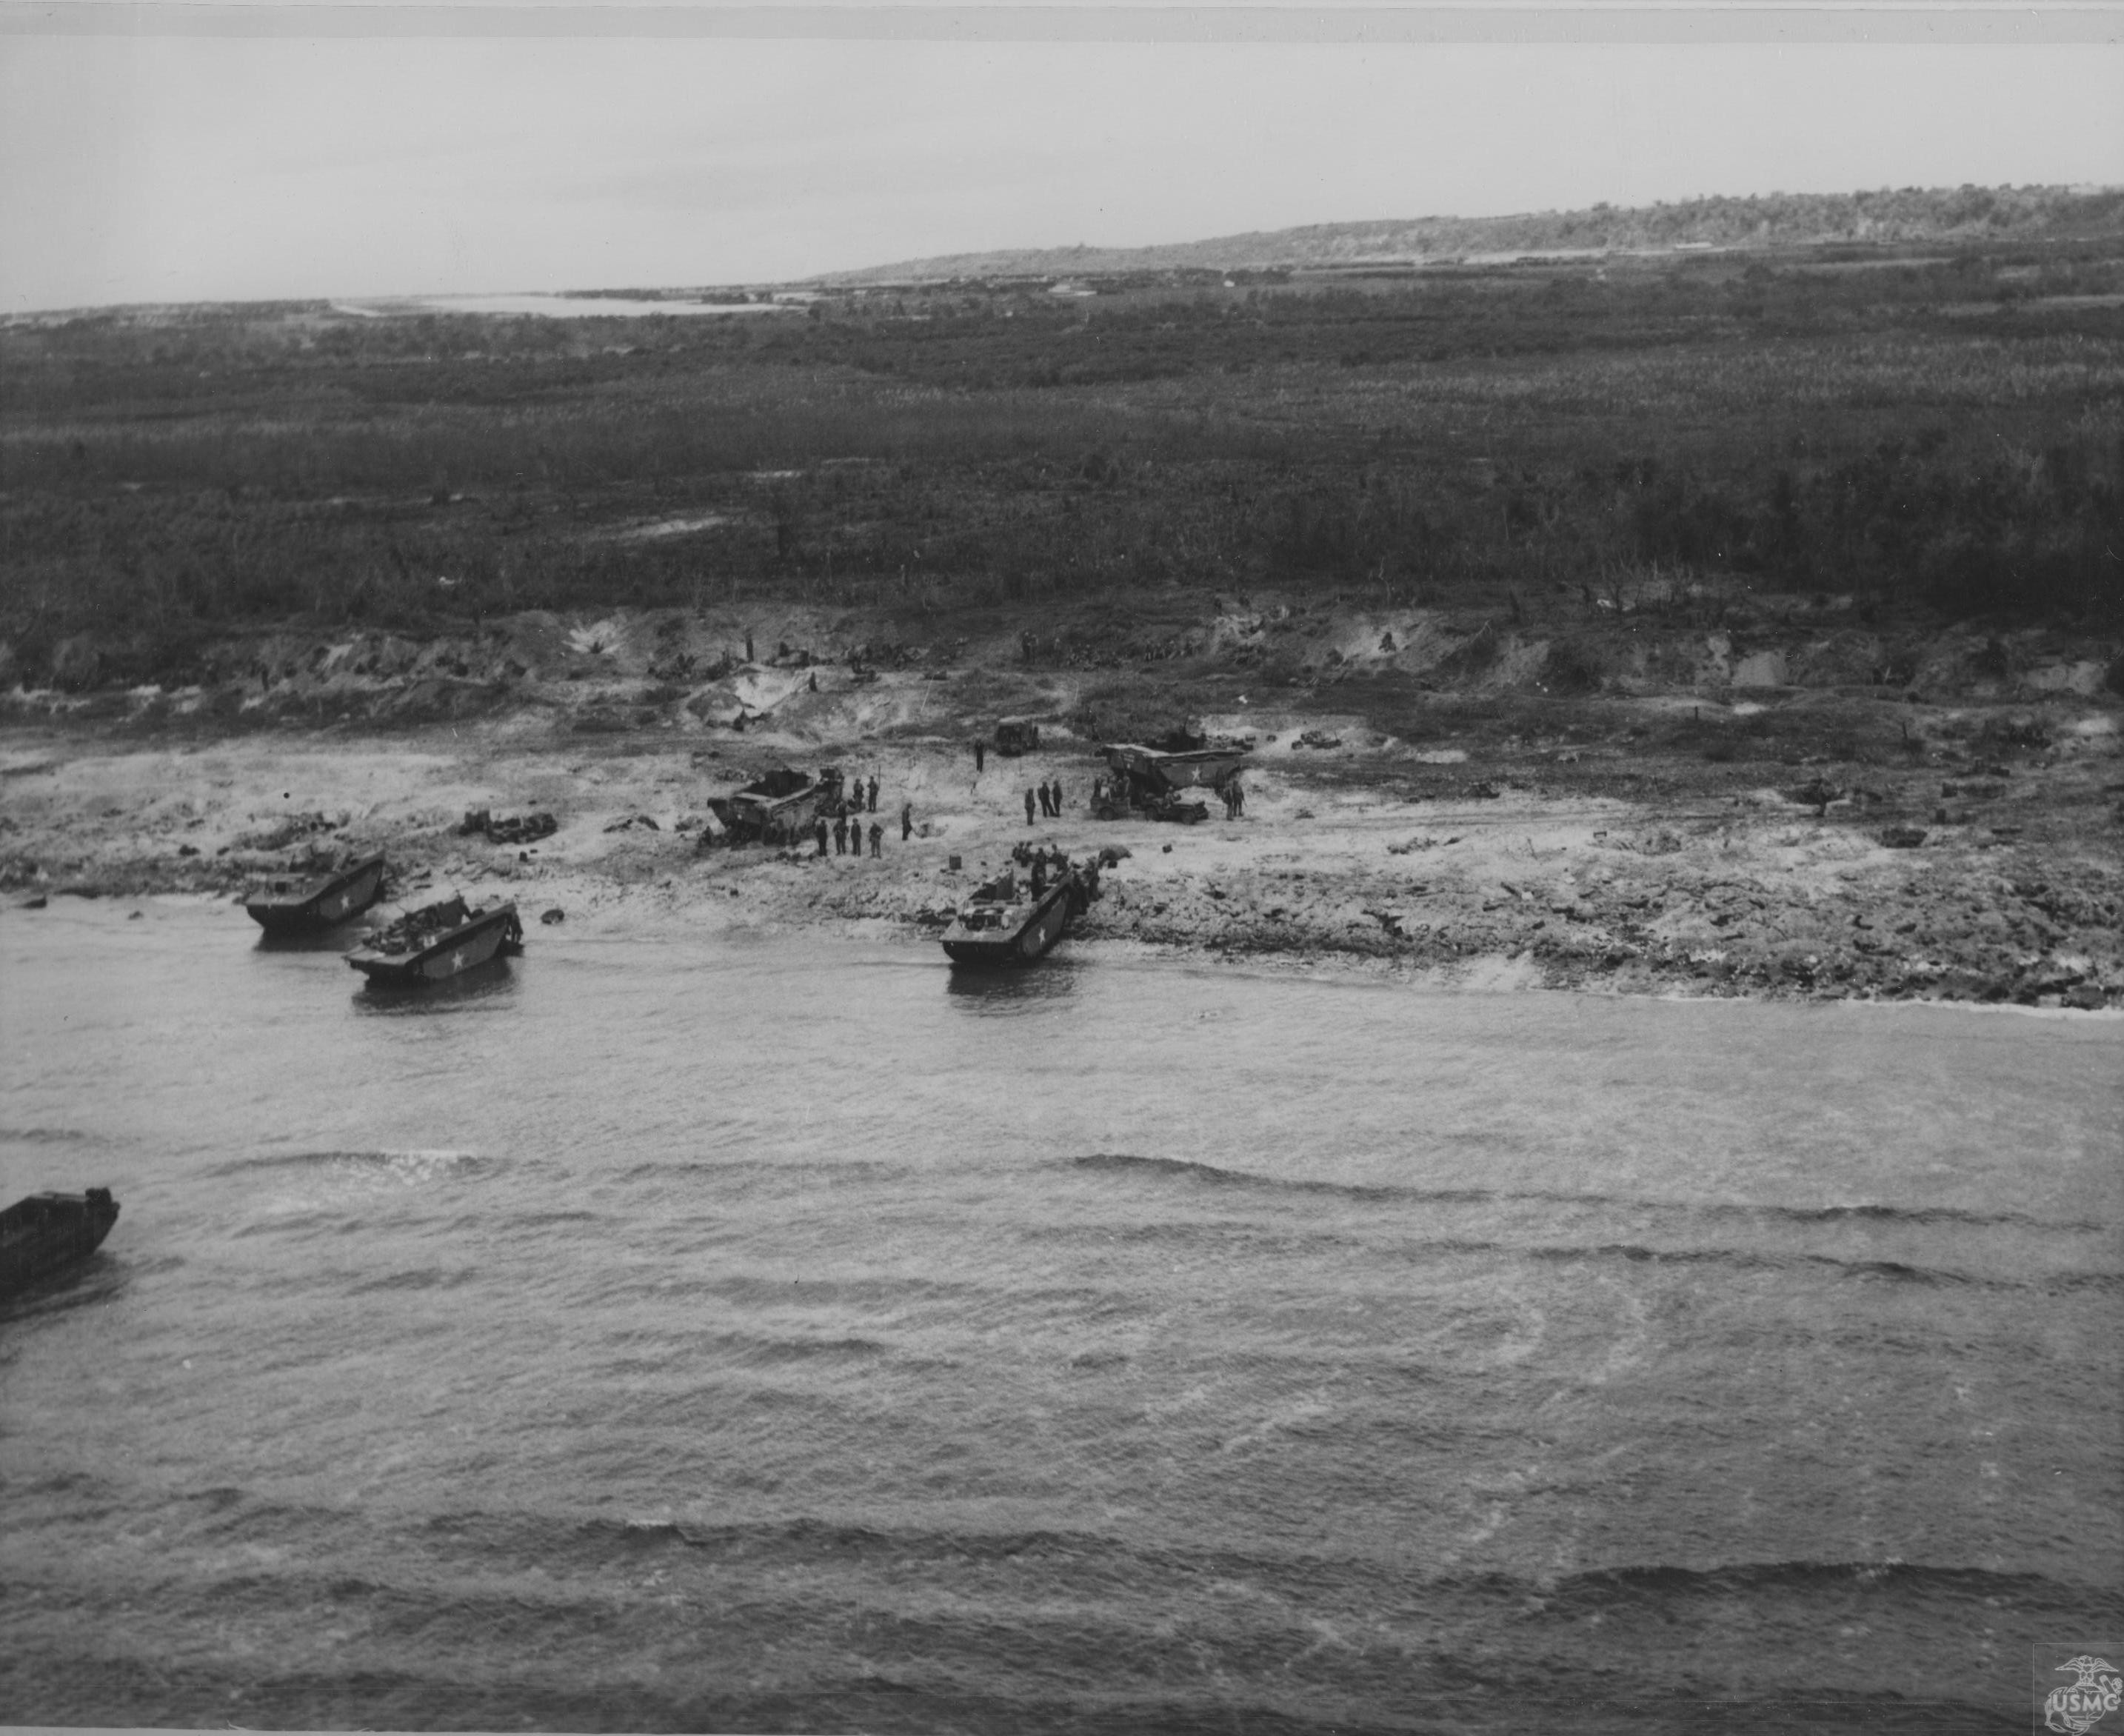 US Marines landing on Tinian, Mariana Islands, 24 Jul 1944